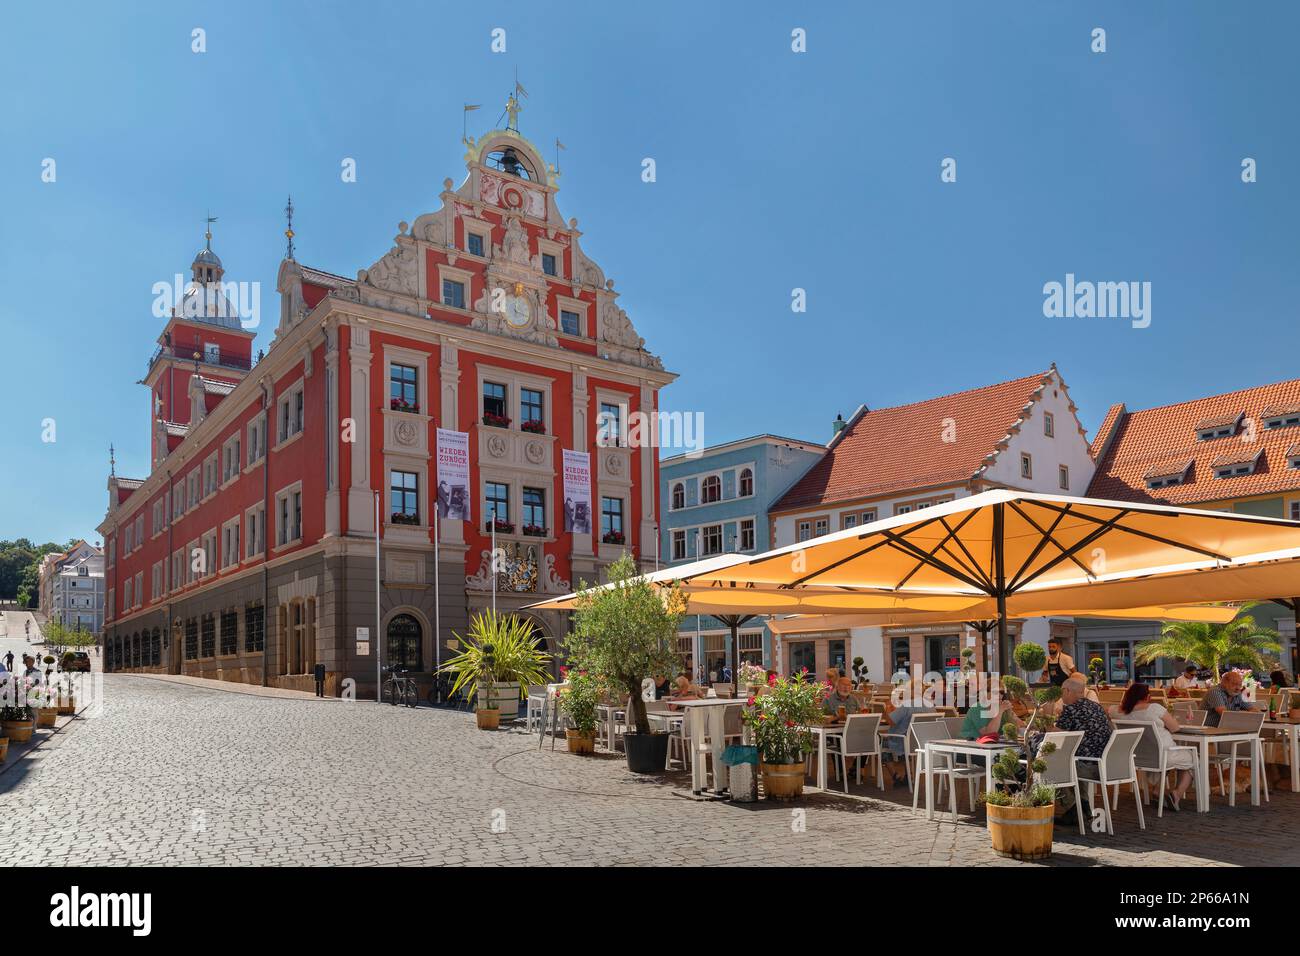 Hauptmarkt market place and town hall, Gotha, Thuringian Basin, Thuringia, Germany, Europe Stock Photo